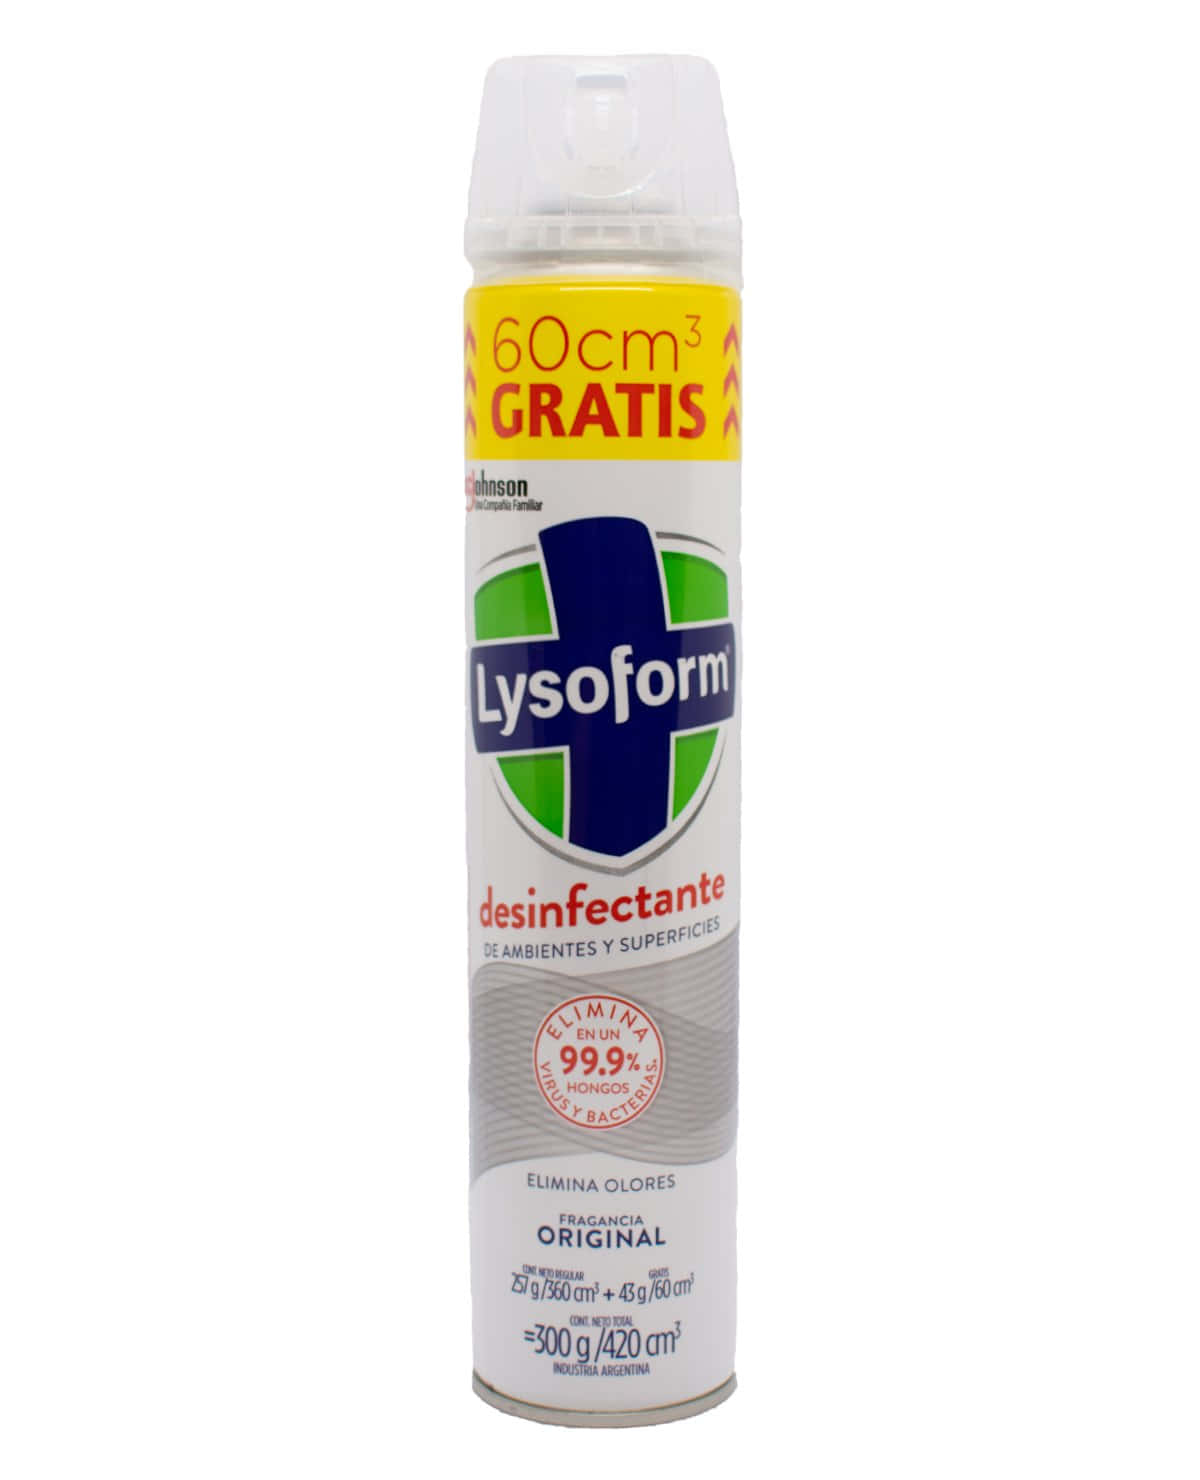 Desinfectante Lysoform Ambiente/Superficie 60 Cm3 Gratis - Fragamcia Original 420 Cm3